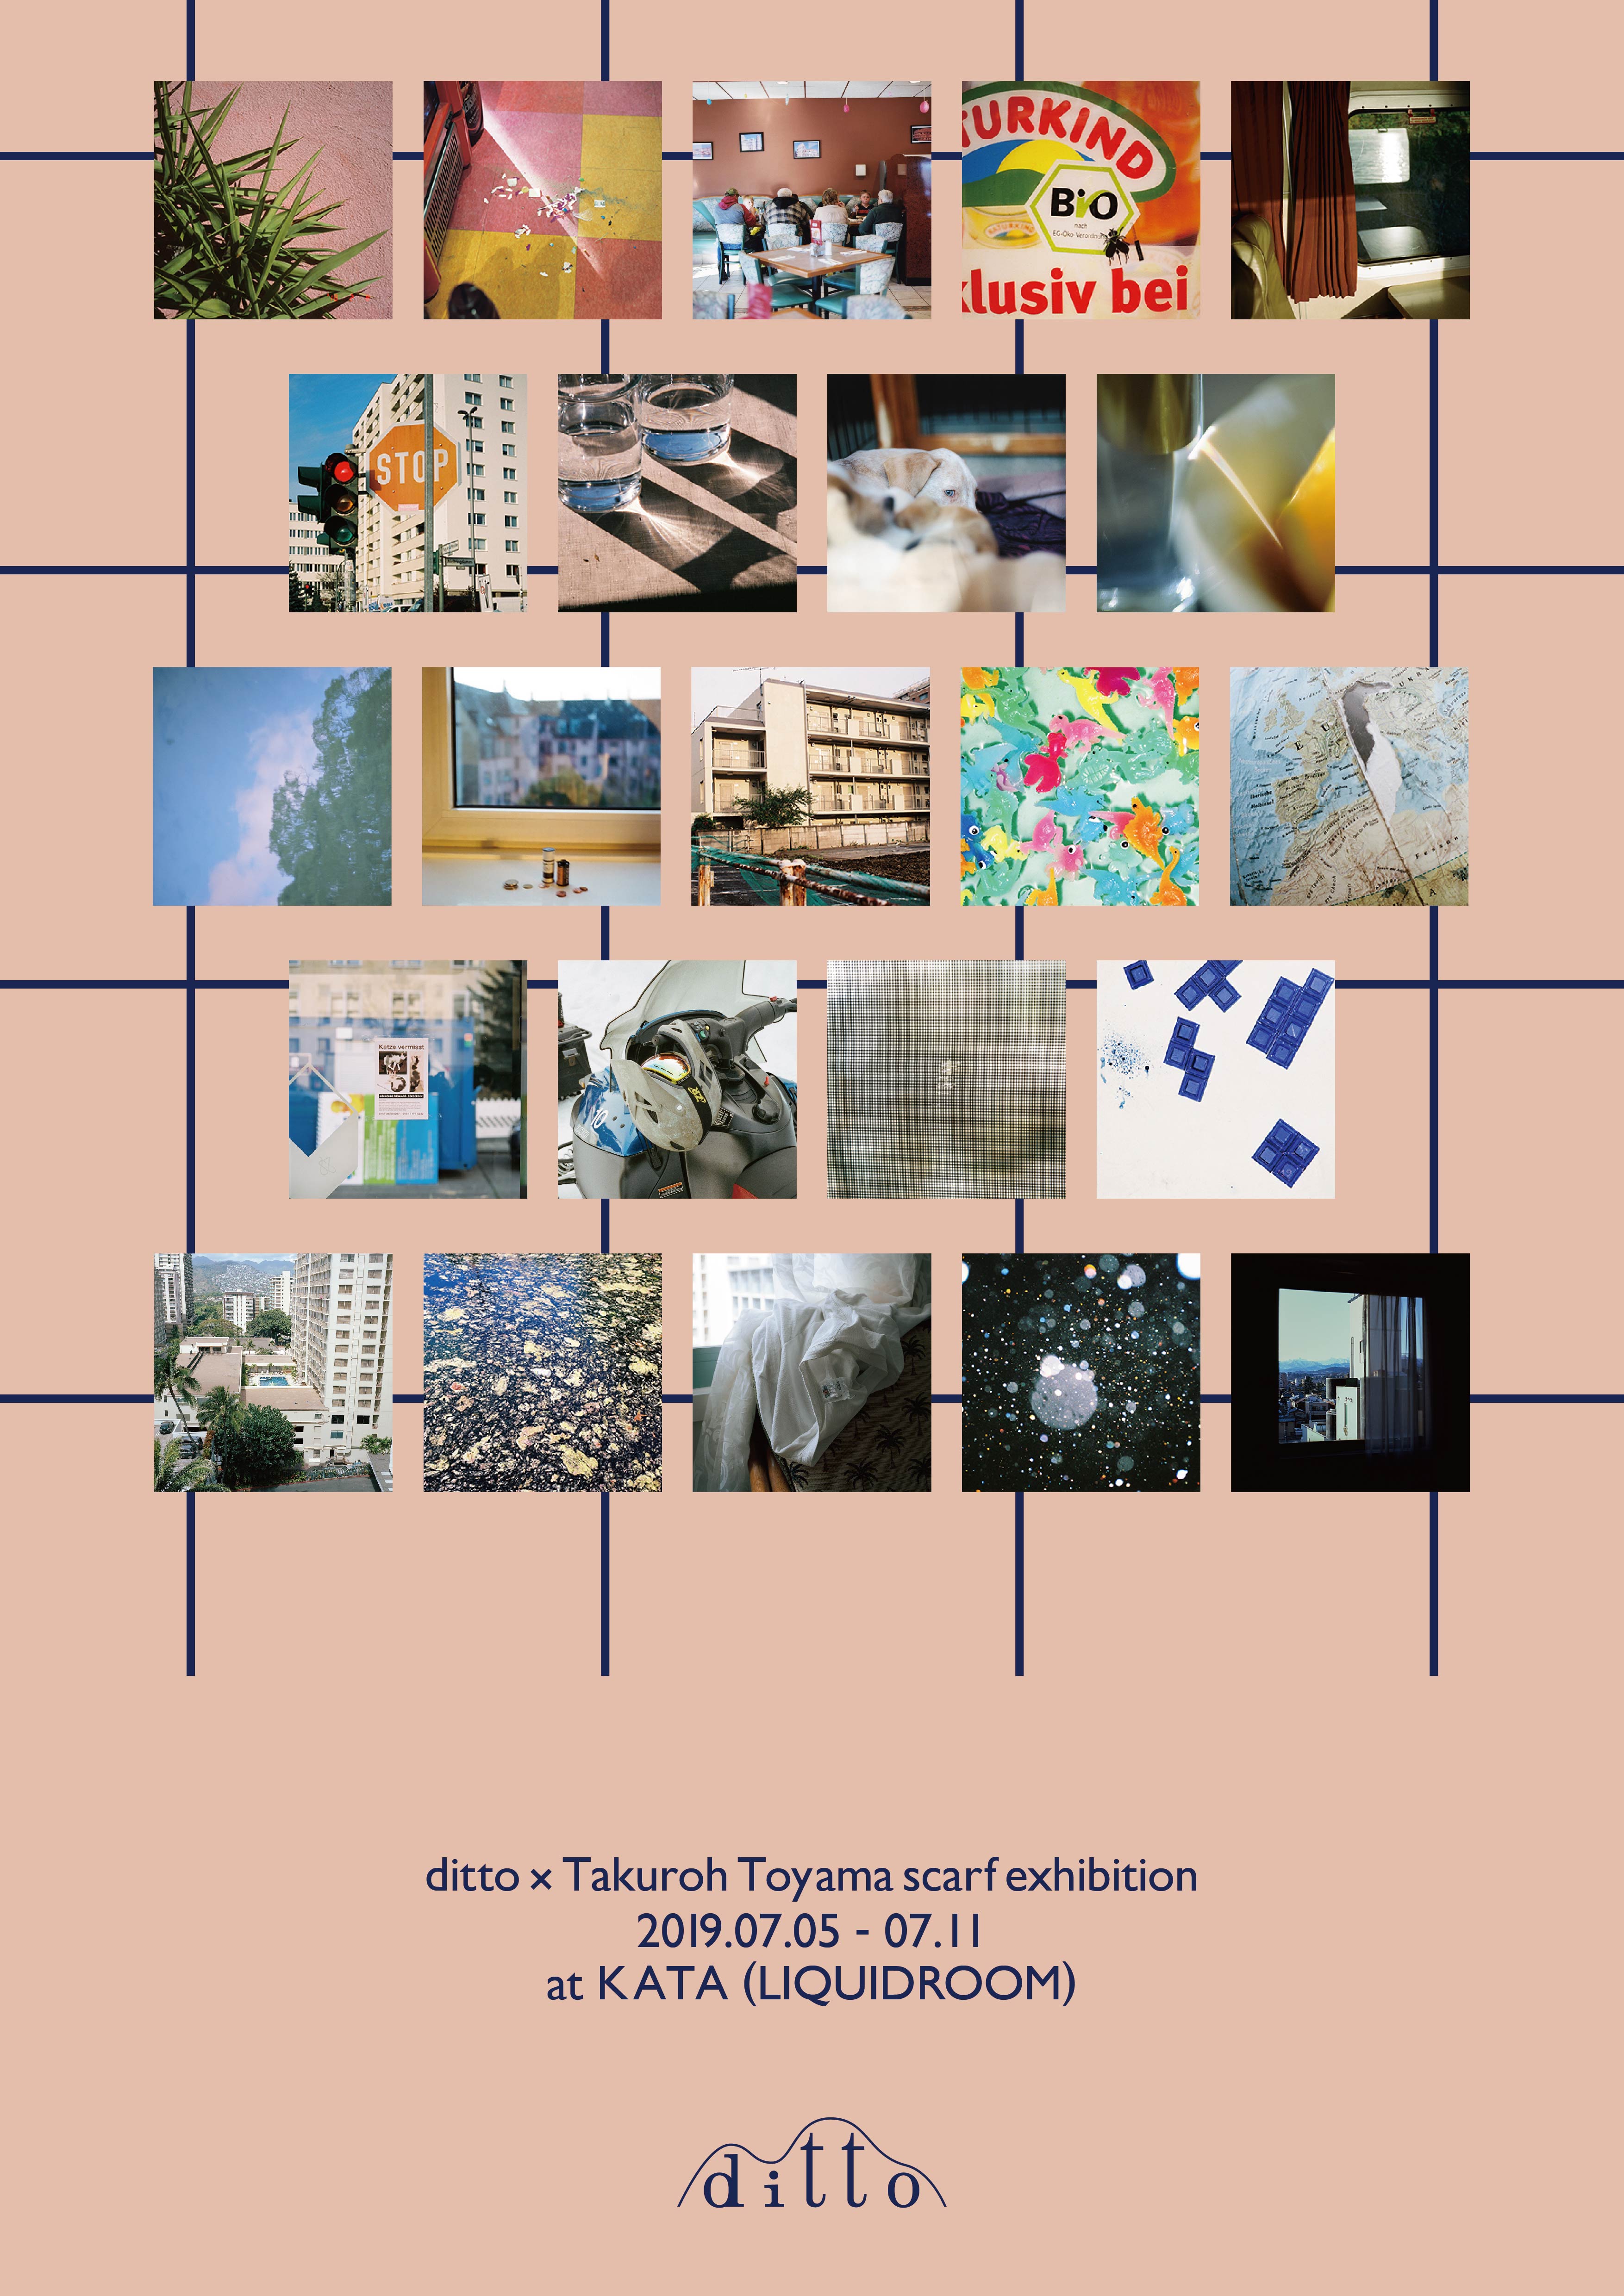 ditto × Takuroh Toyama scarf exhibition